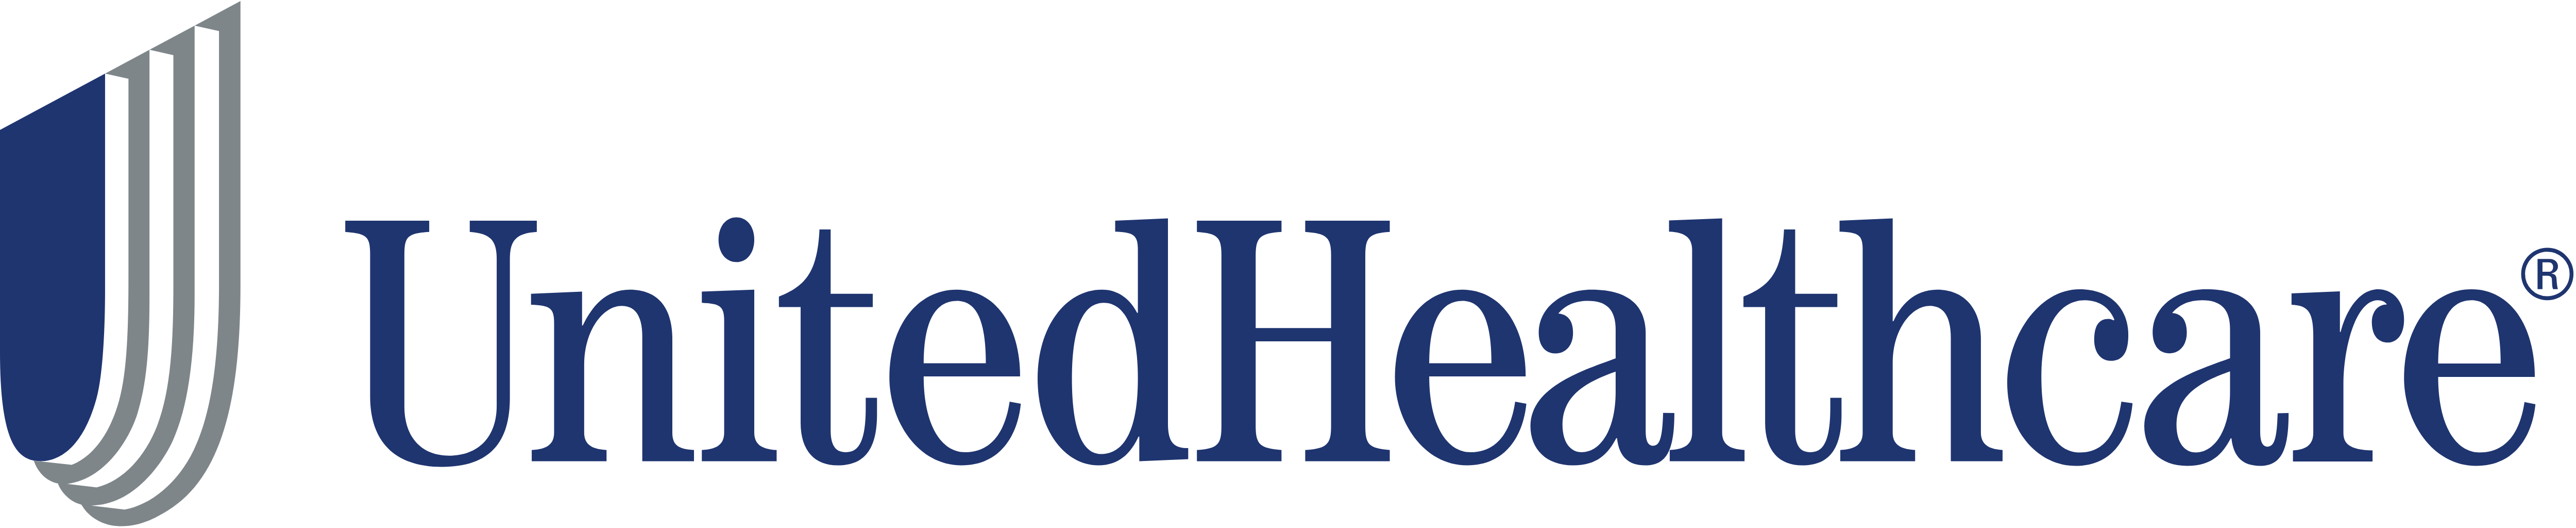 31 United Healthcare Logo Vector - Pin Logo Icon